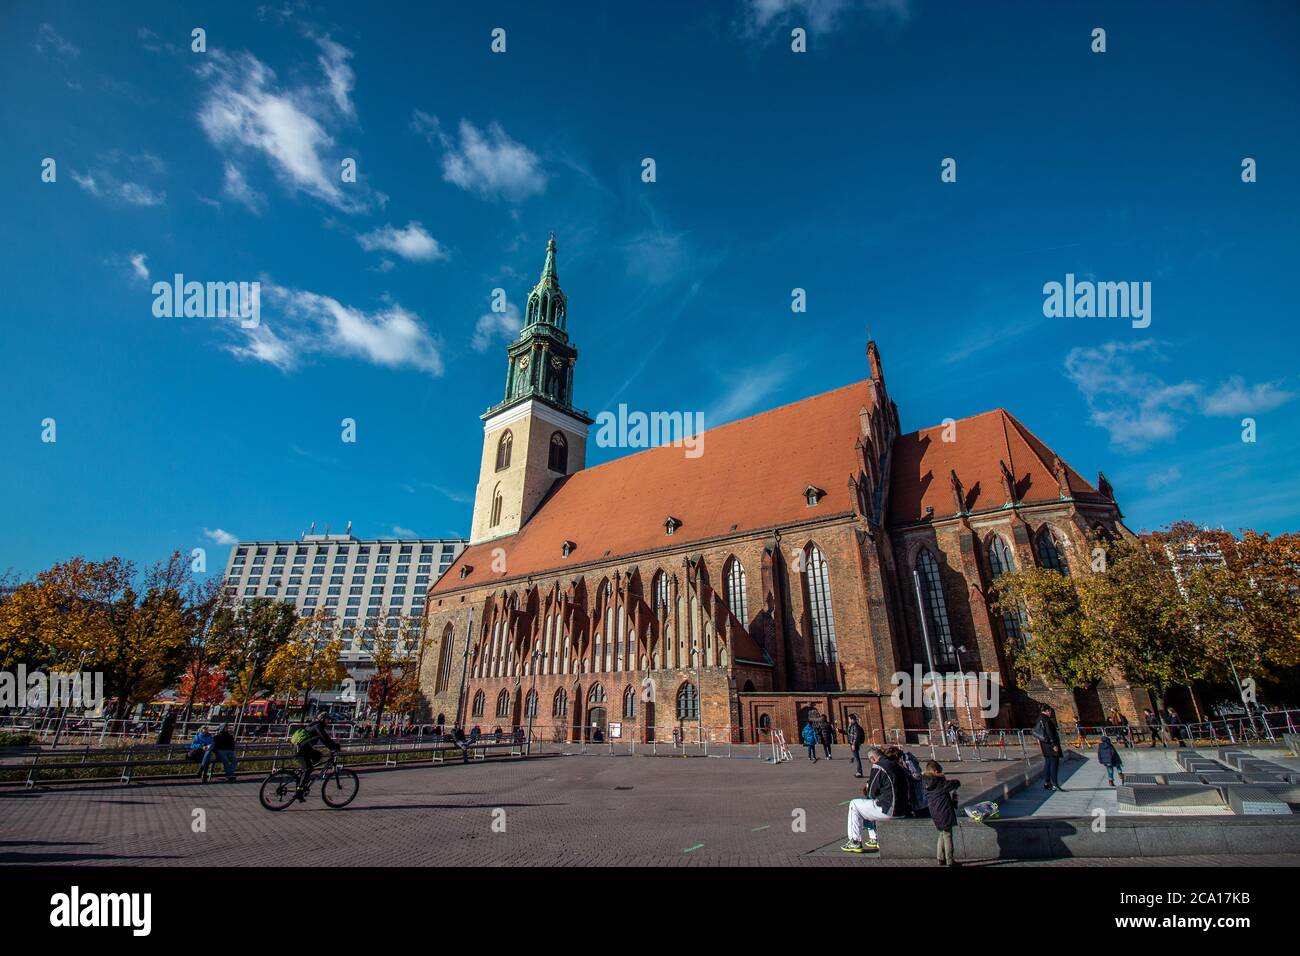 St. Mary's Church or Marienkirche in German near Alexanderplatz in central Berlin, Germany. Stock Photo